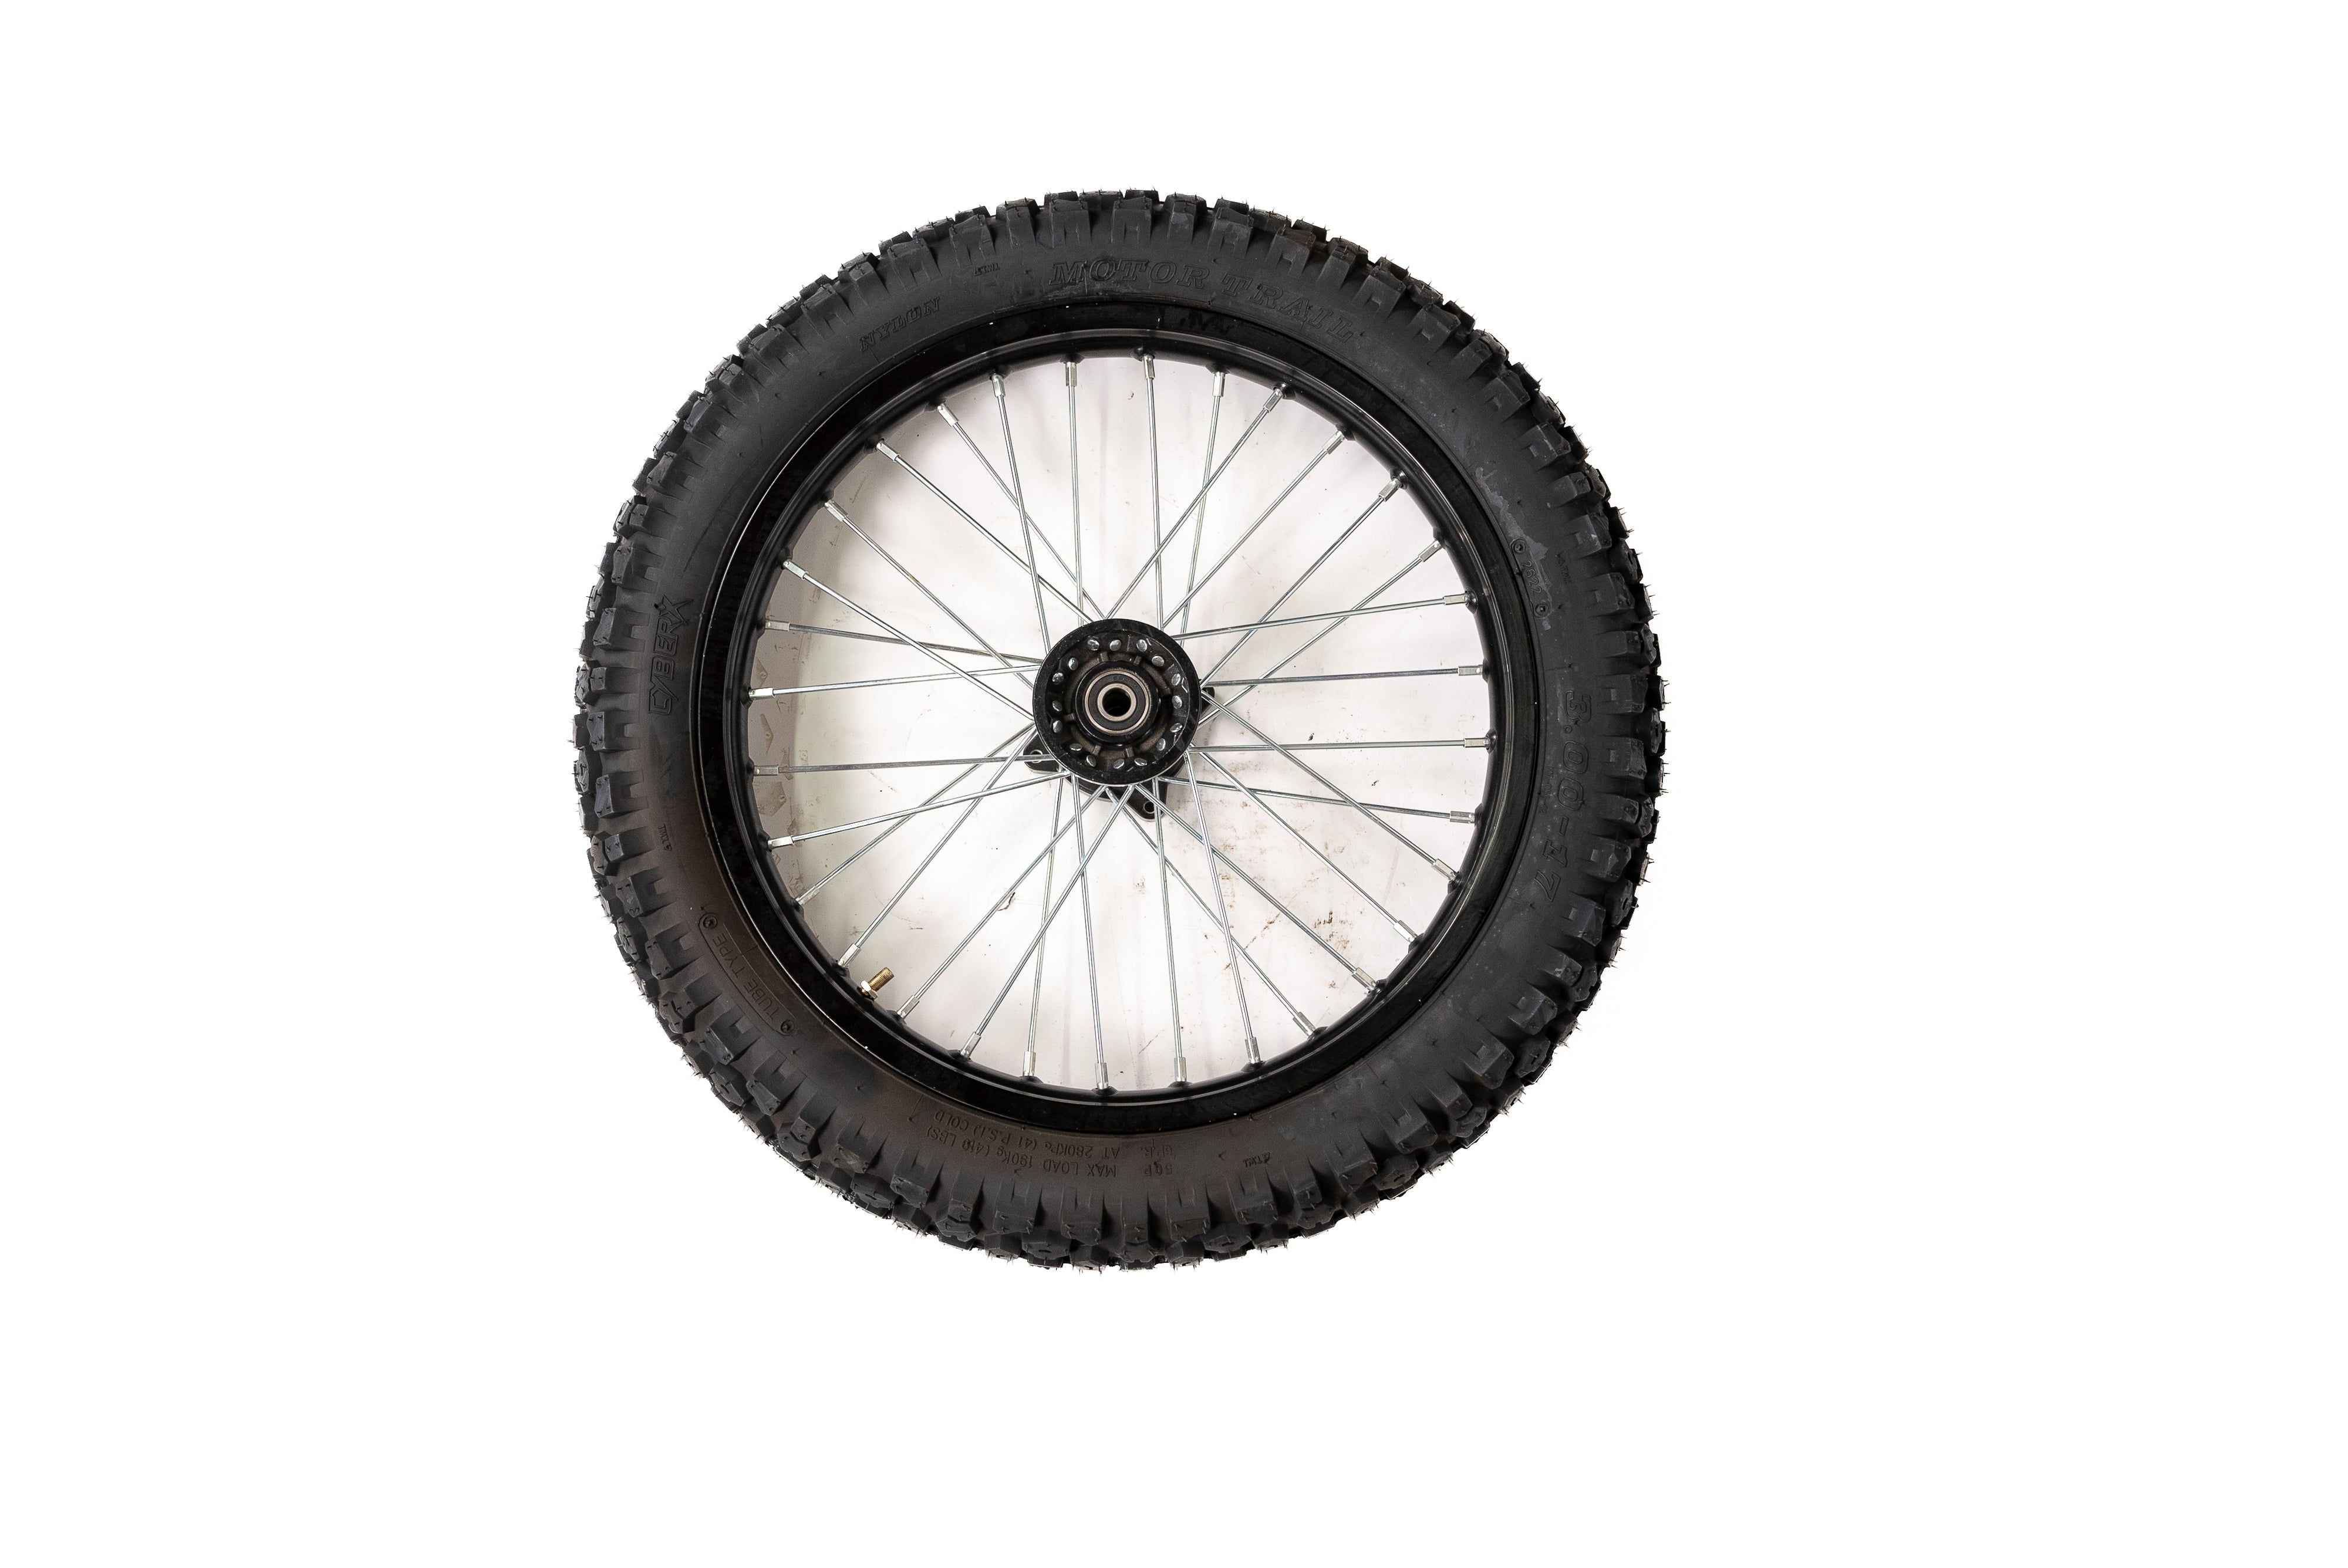 Xion Bike 16 inch rear wheel Hybrid tire